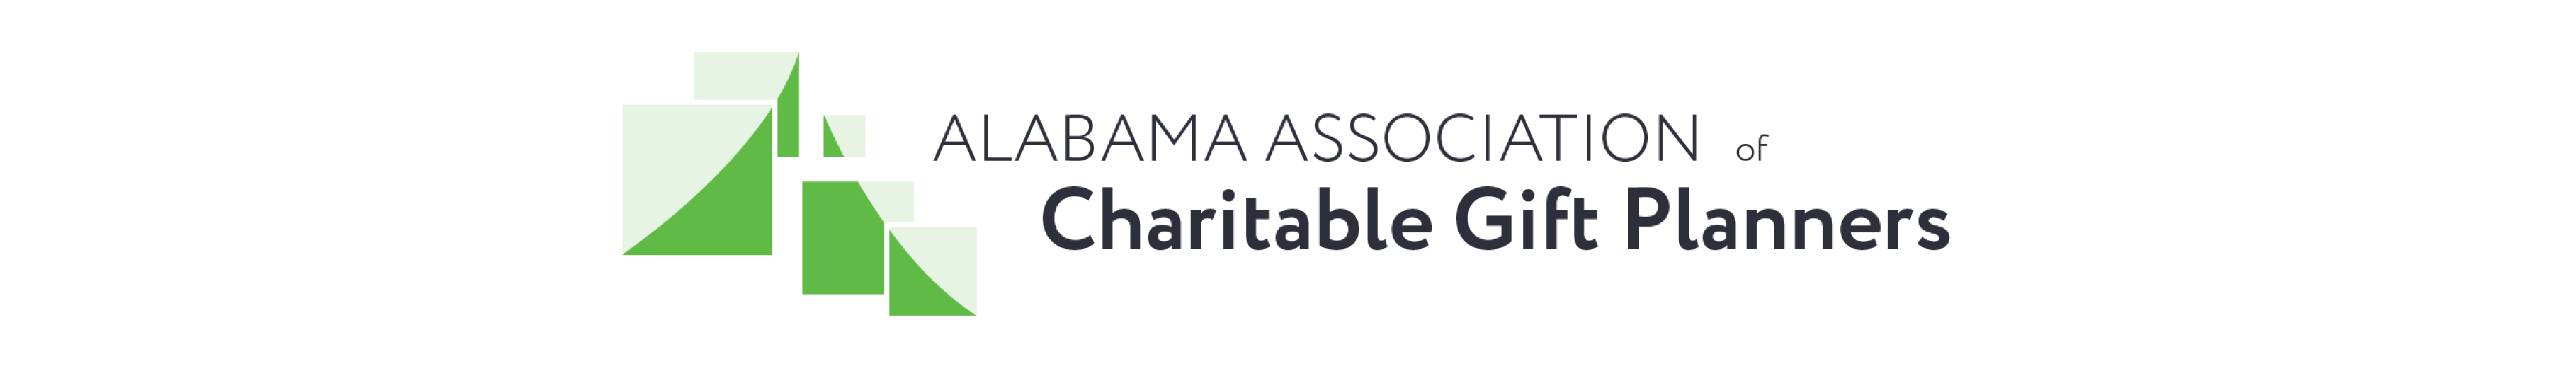 Alabama Association of Charitable Gift Planners Logo